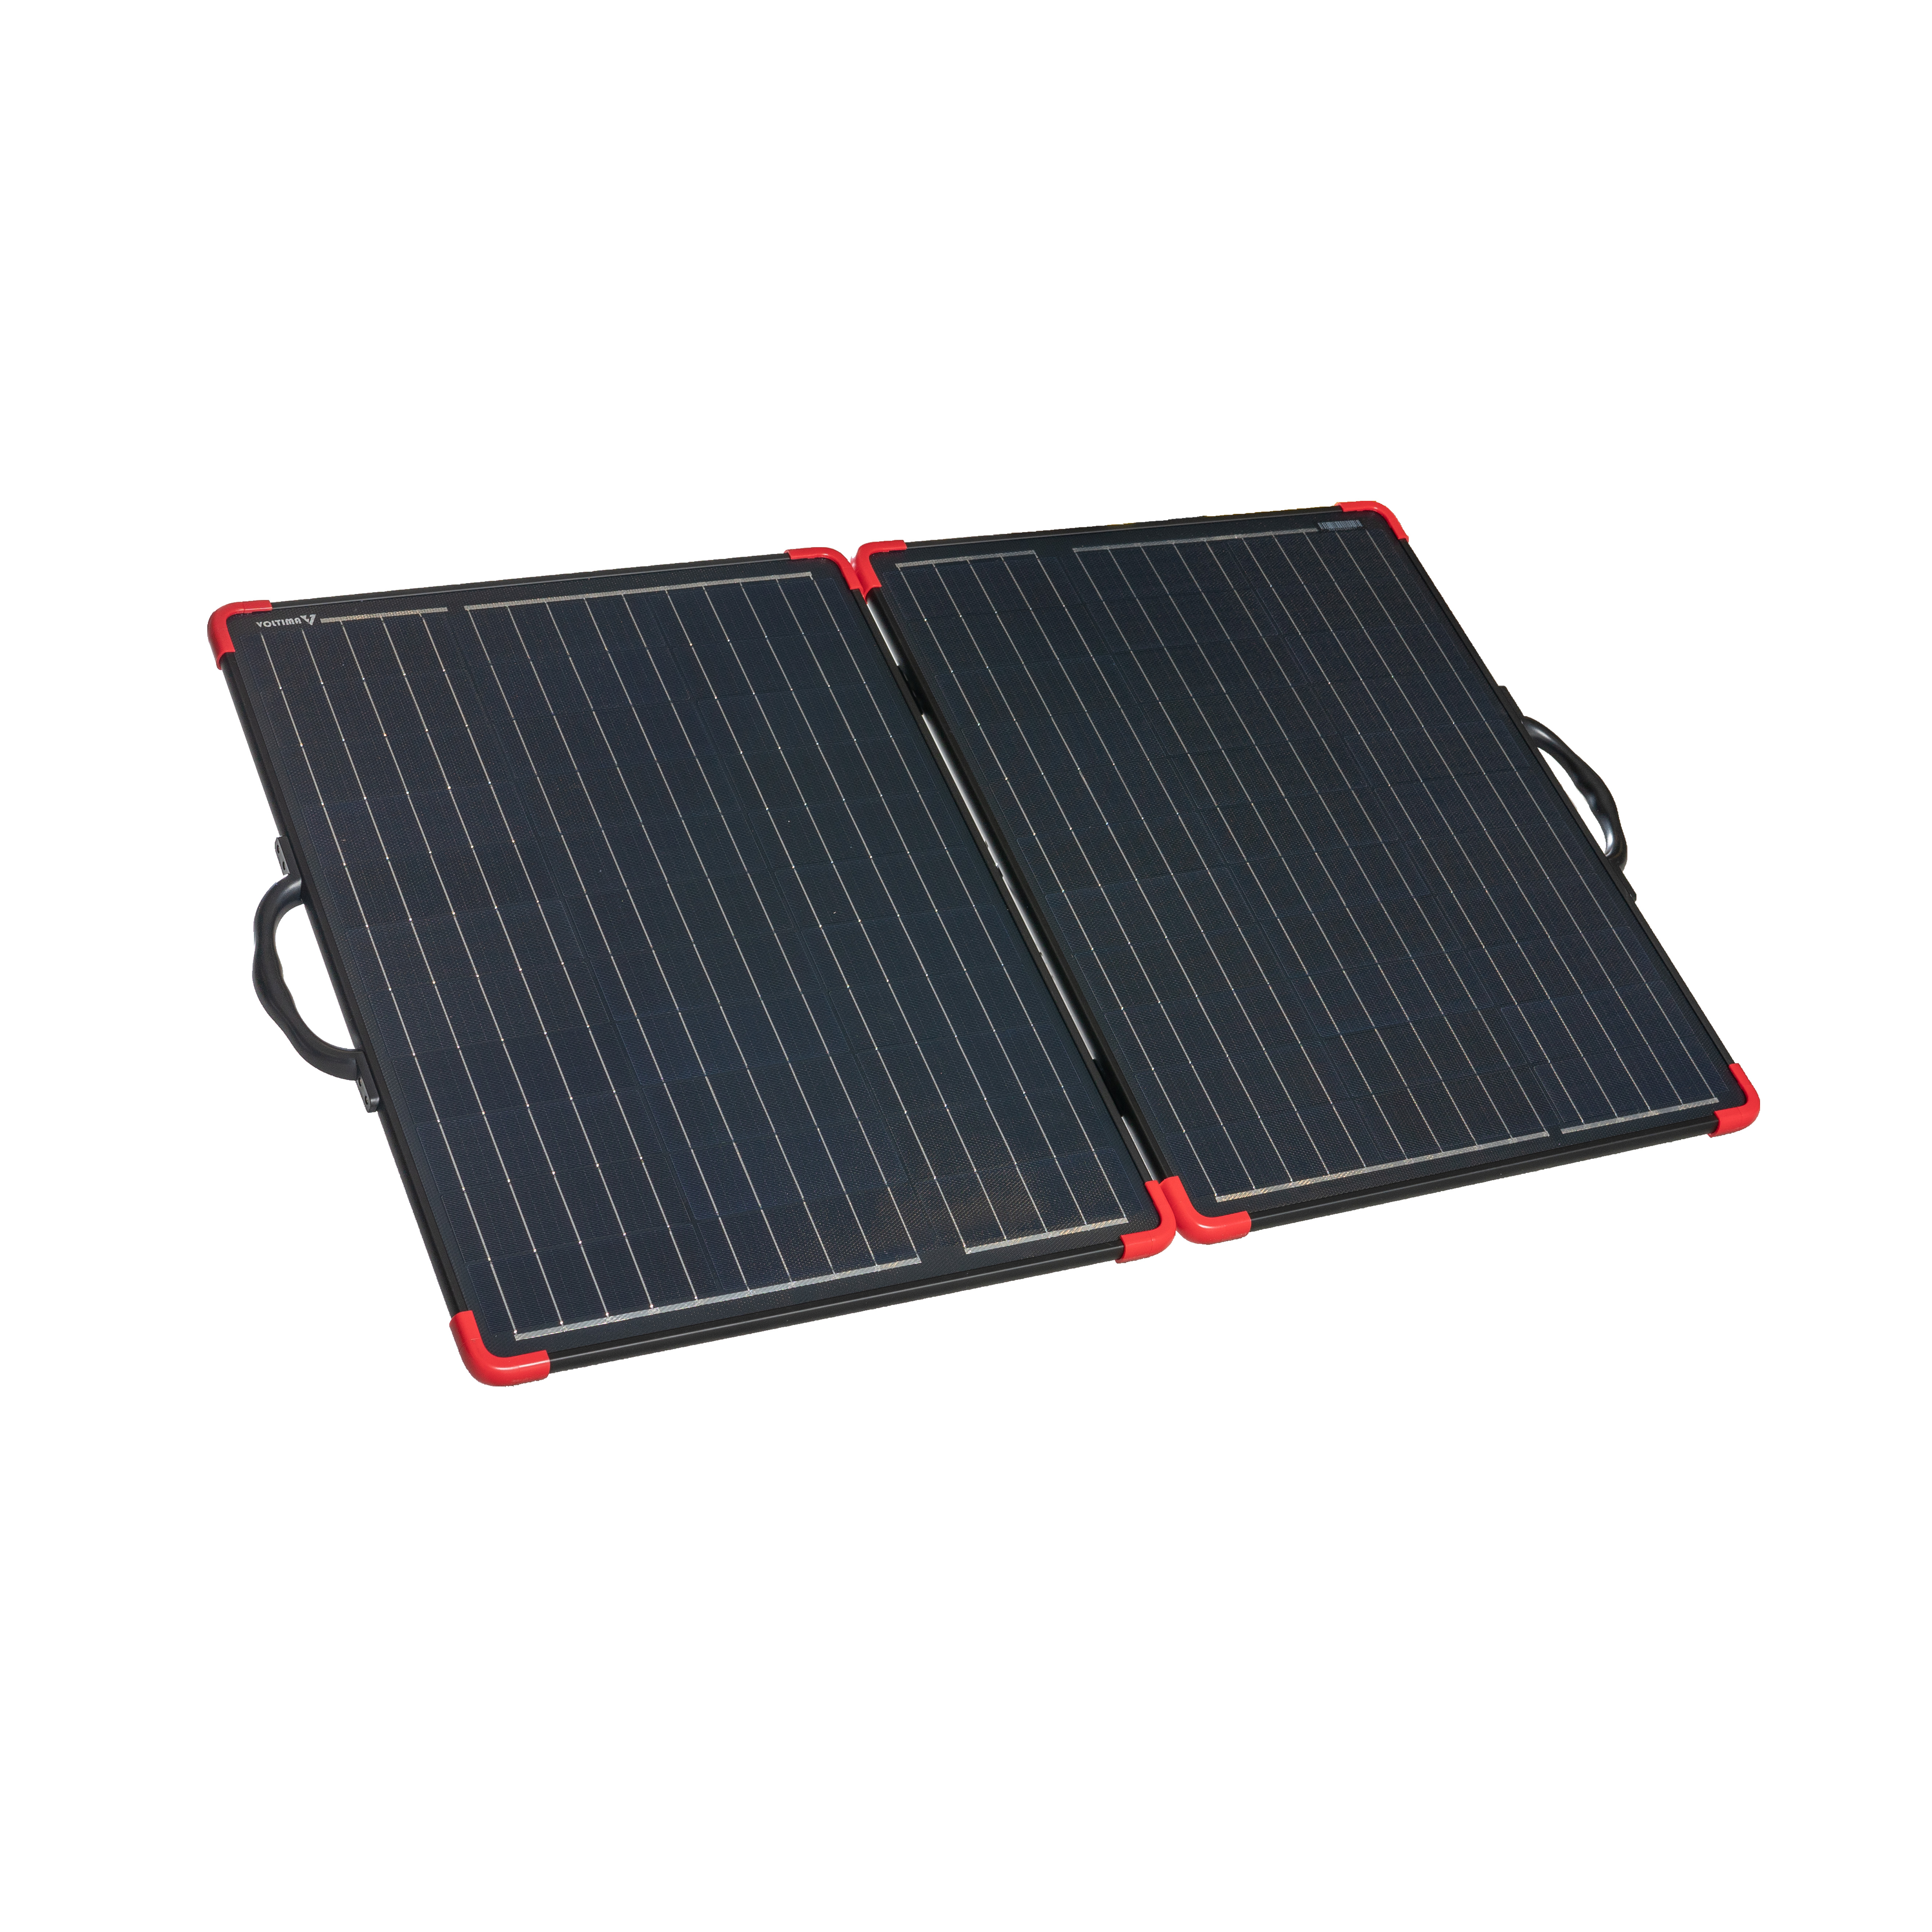 Faltbares Solarmodul 100W mit Laderegler - das mobile Batterie